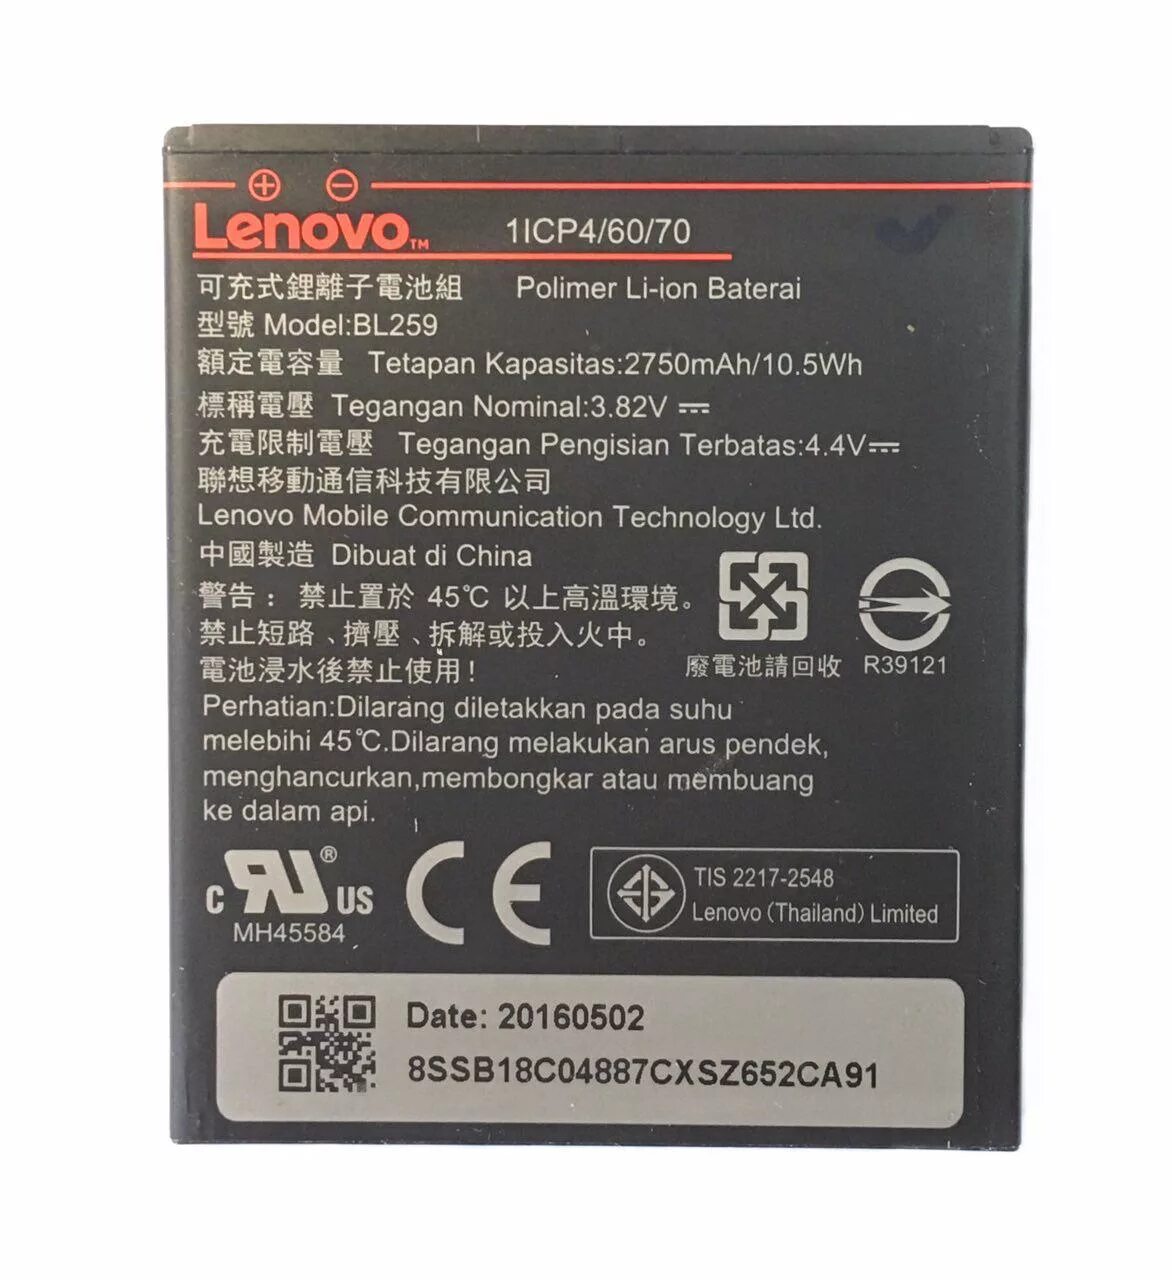 Lenovo батарея купить. Аккумулятор для Lenovo bl259. АКБ Lenovo a6020a40. АКБ Lenovo k5 Pro. Lenovo k12 аккумулятор модель.